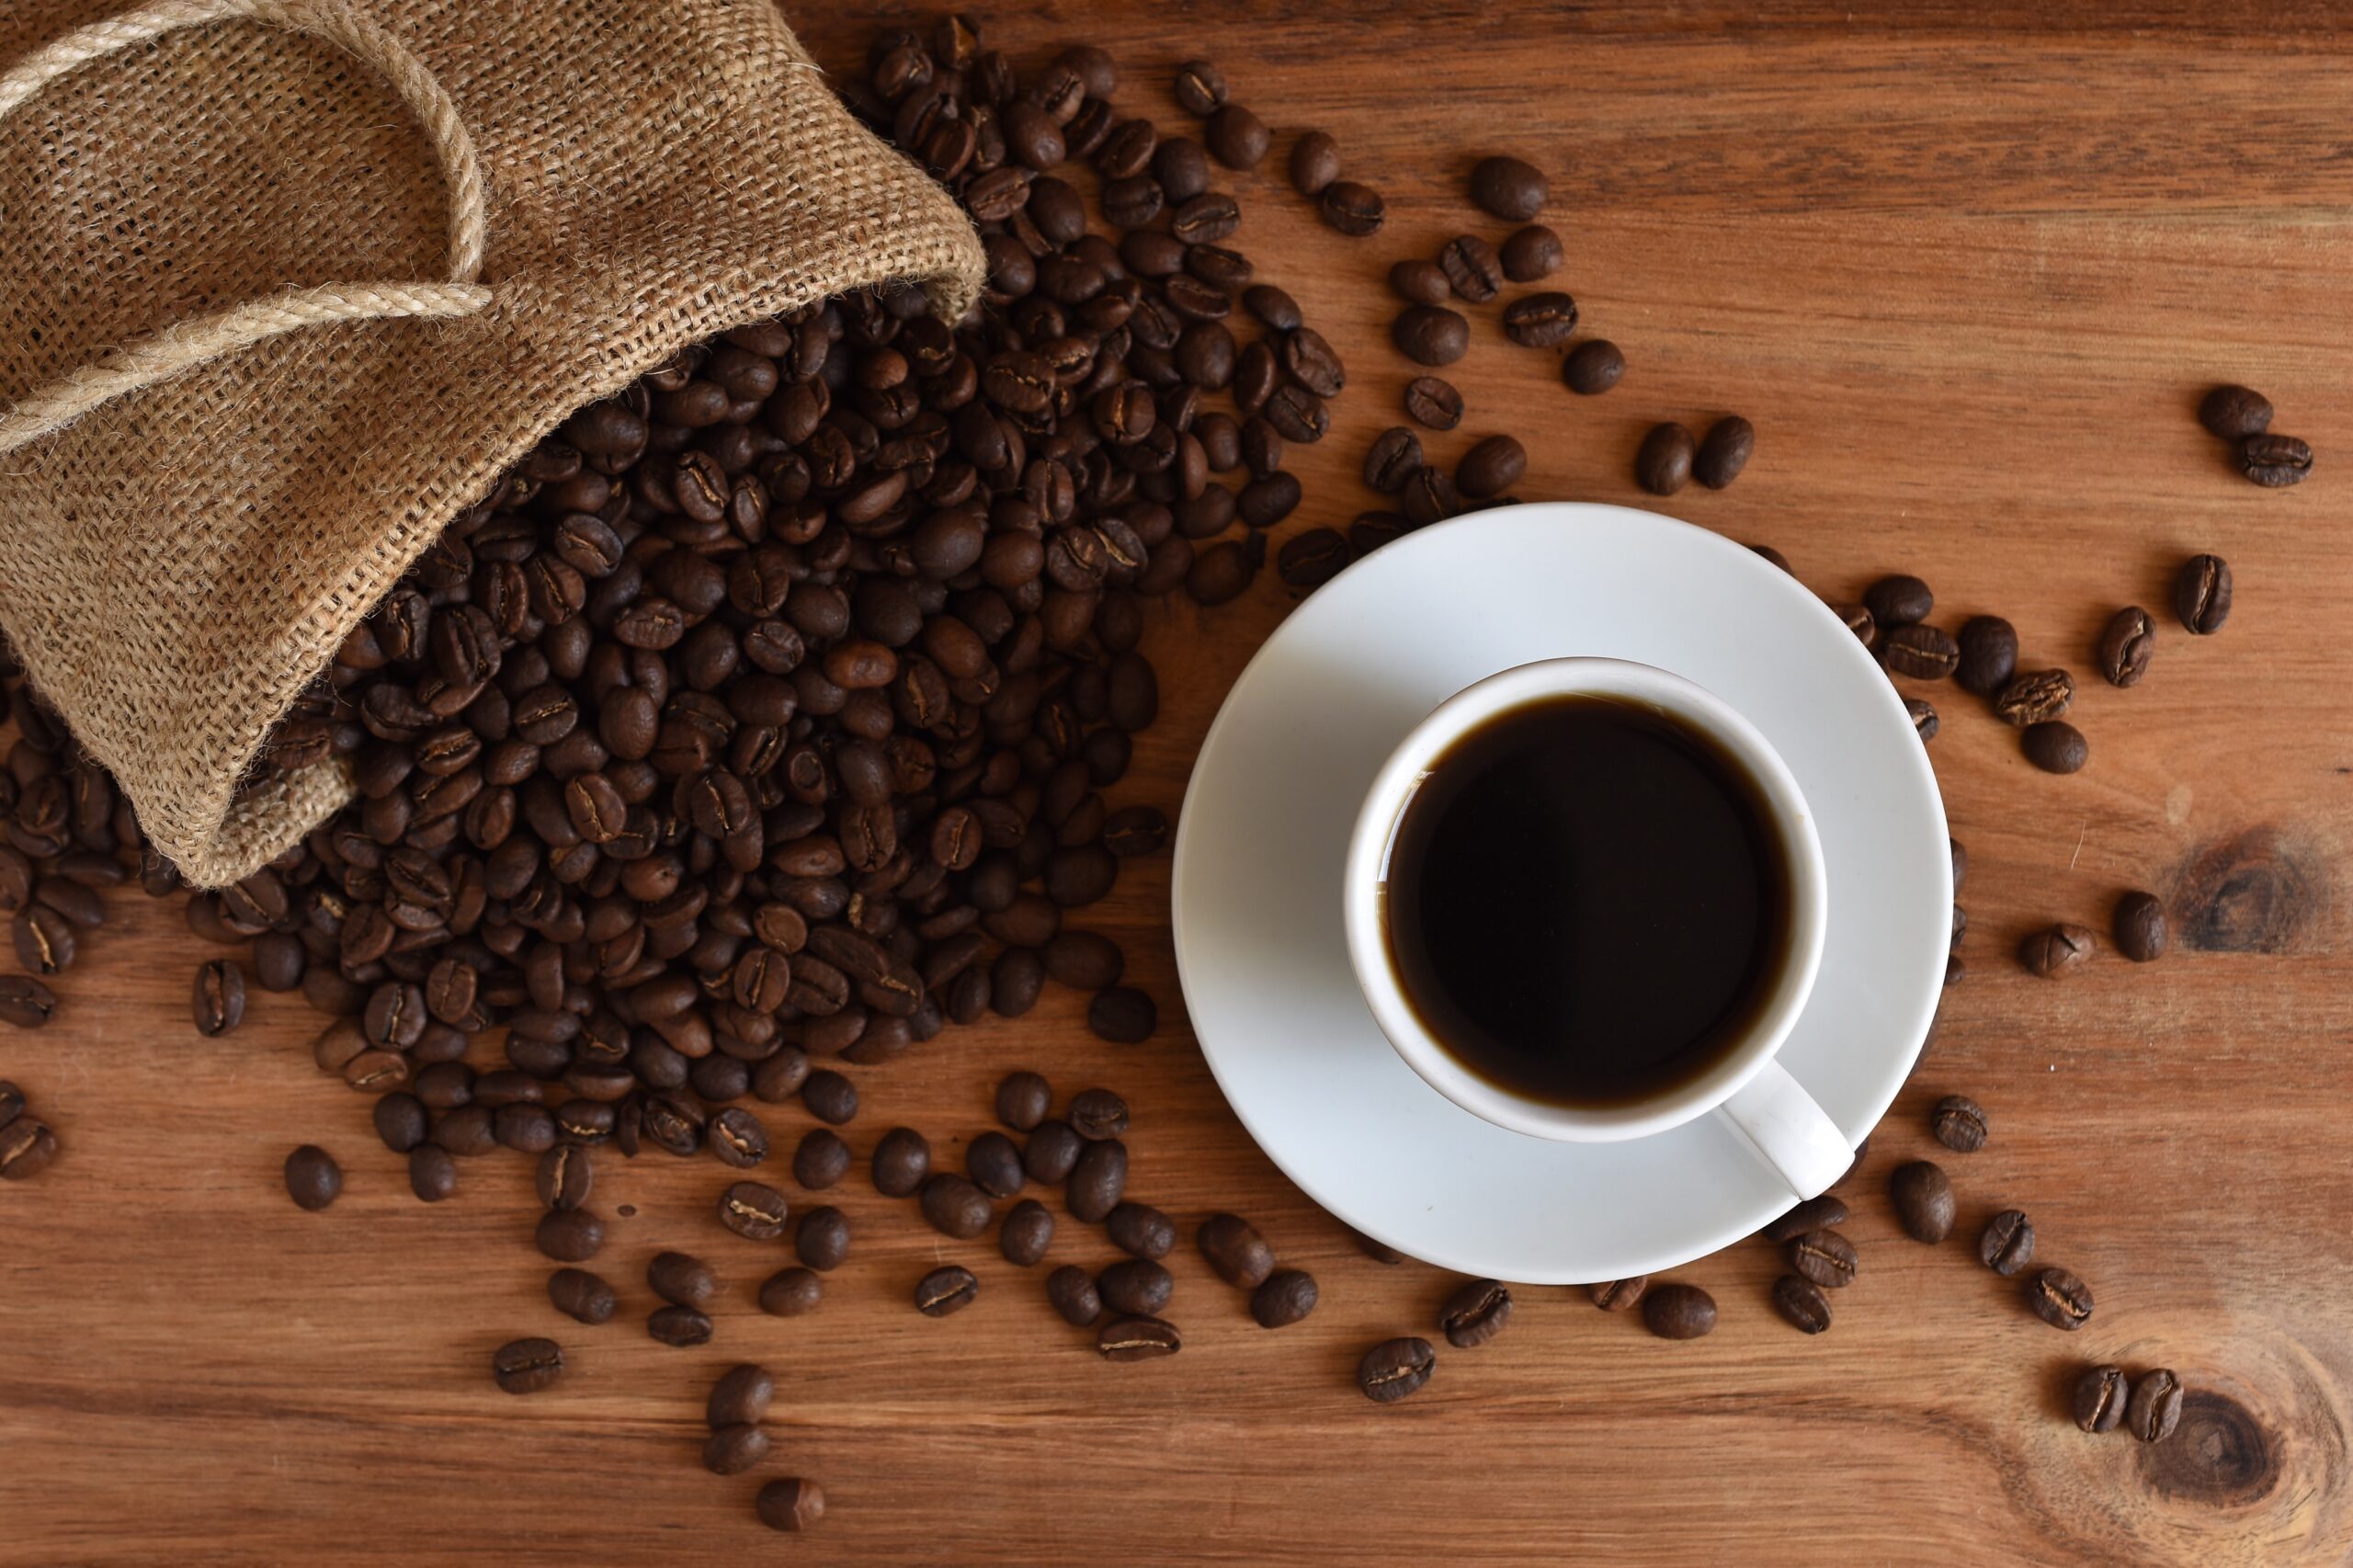 https://www.nectar-of-life.com/bulk-organic-coffee.htm